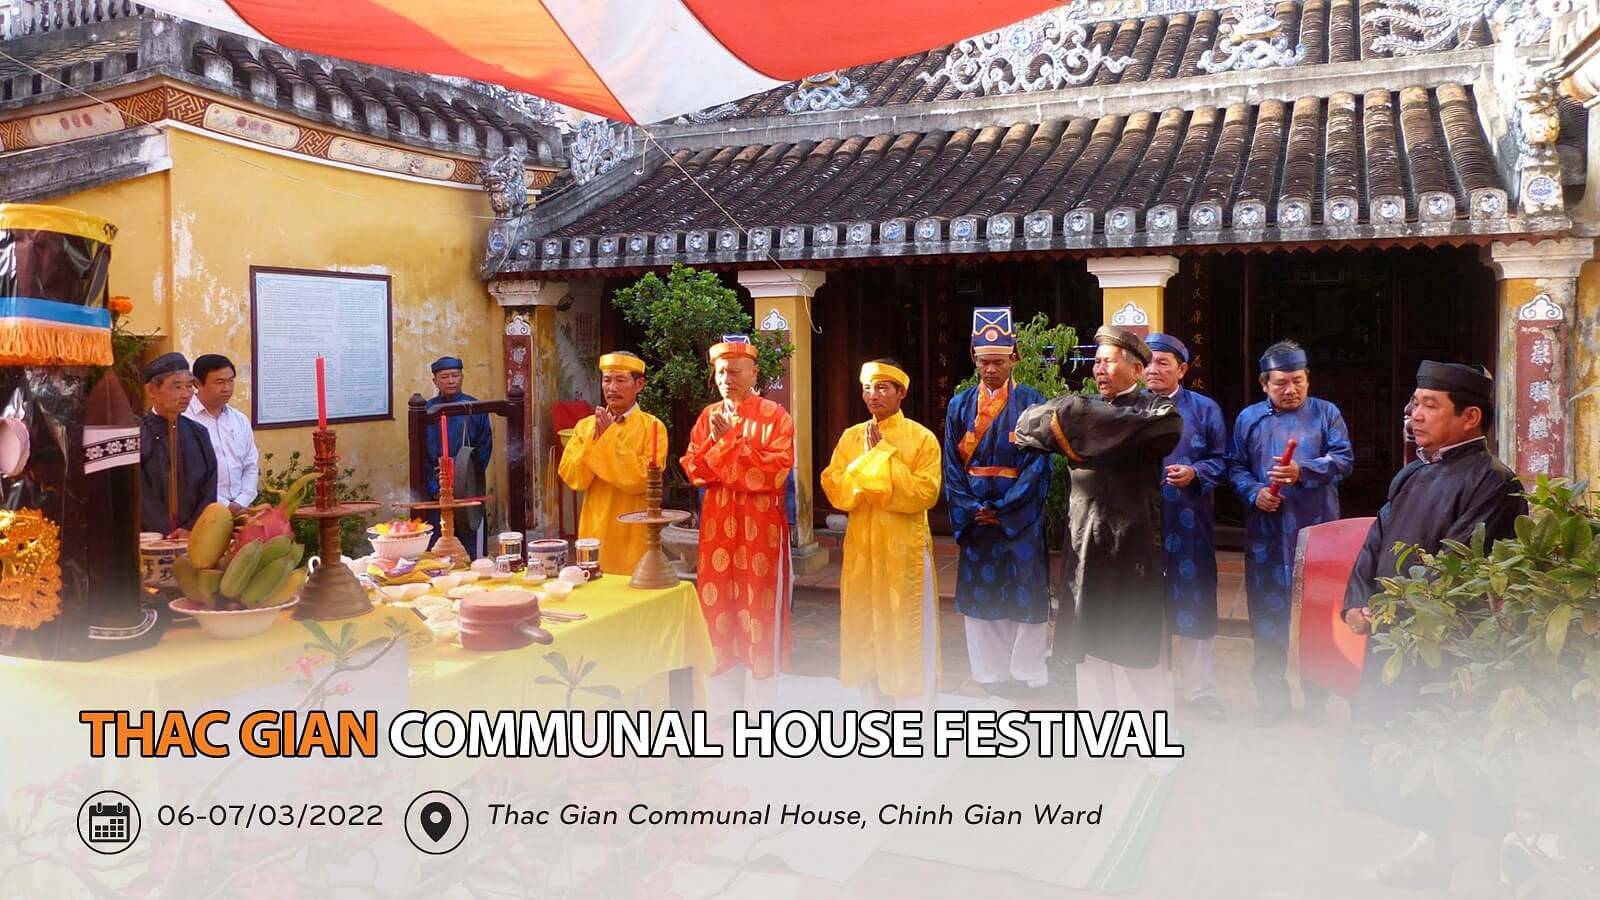 10 Thac Gian Communal House Festival